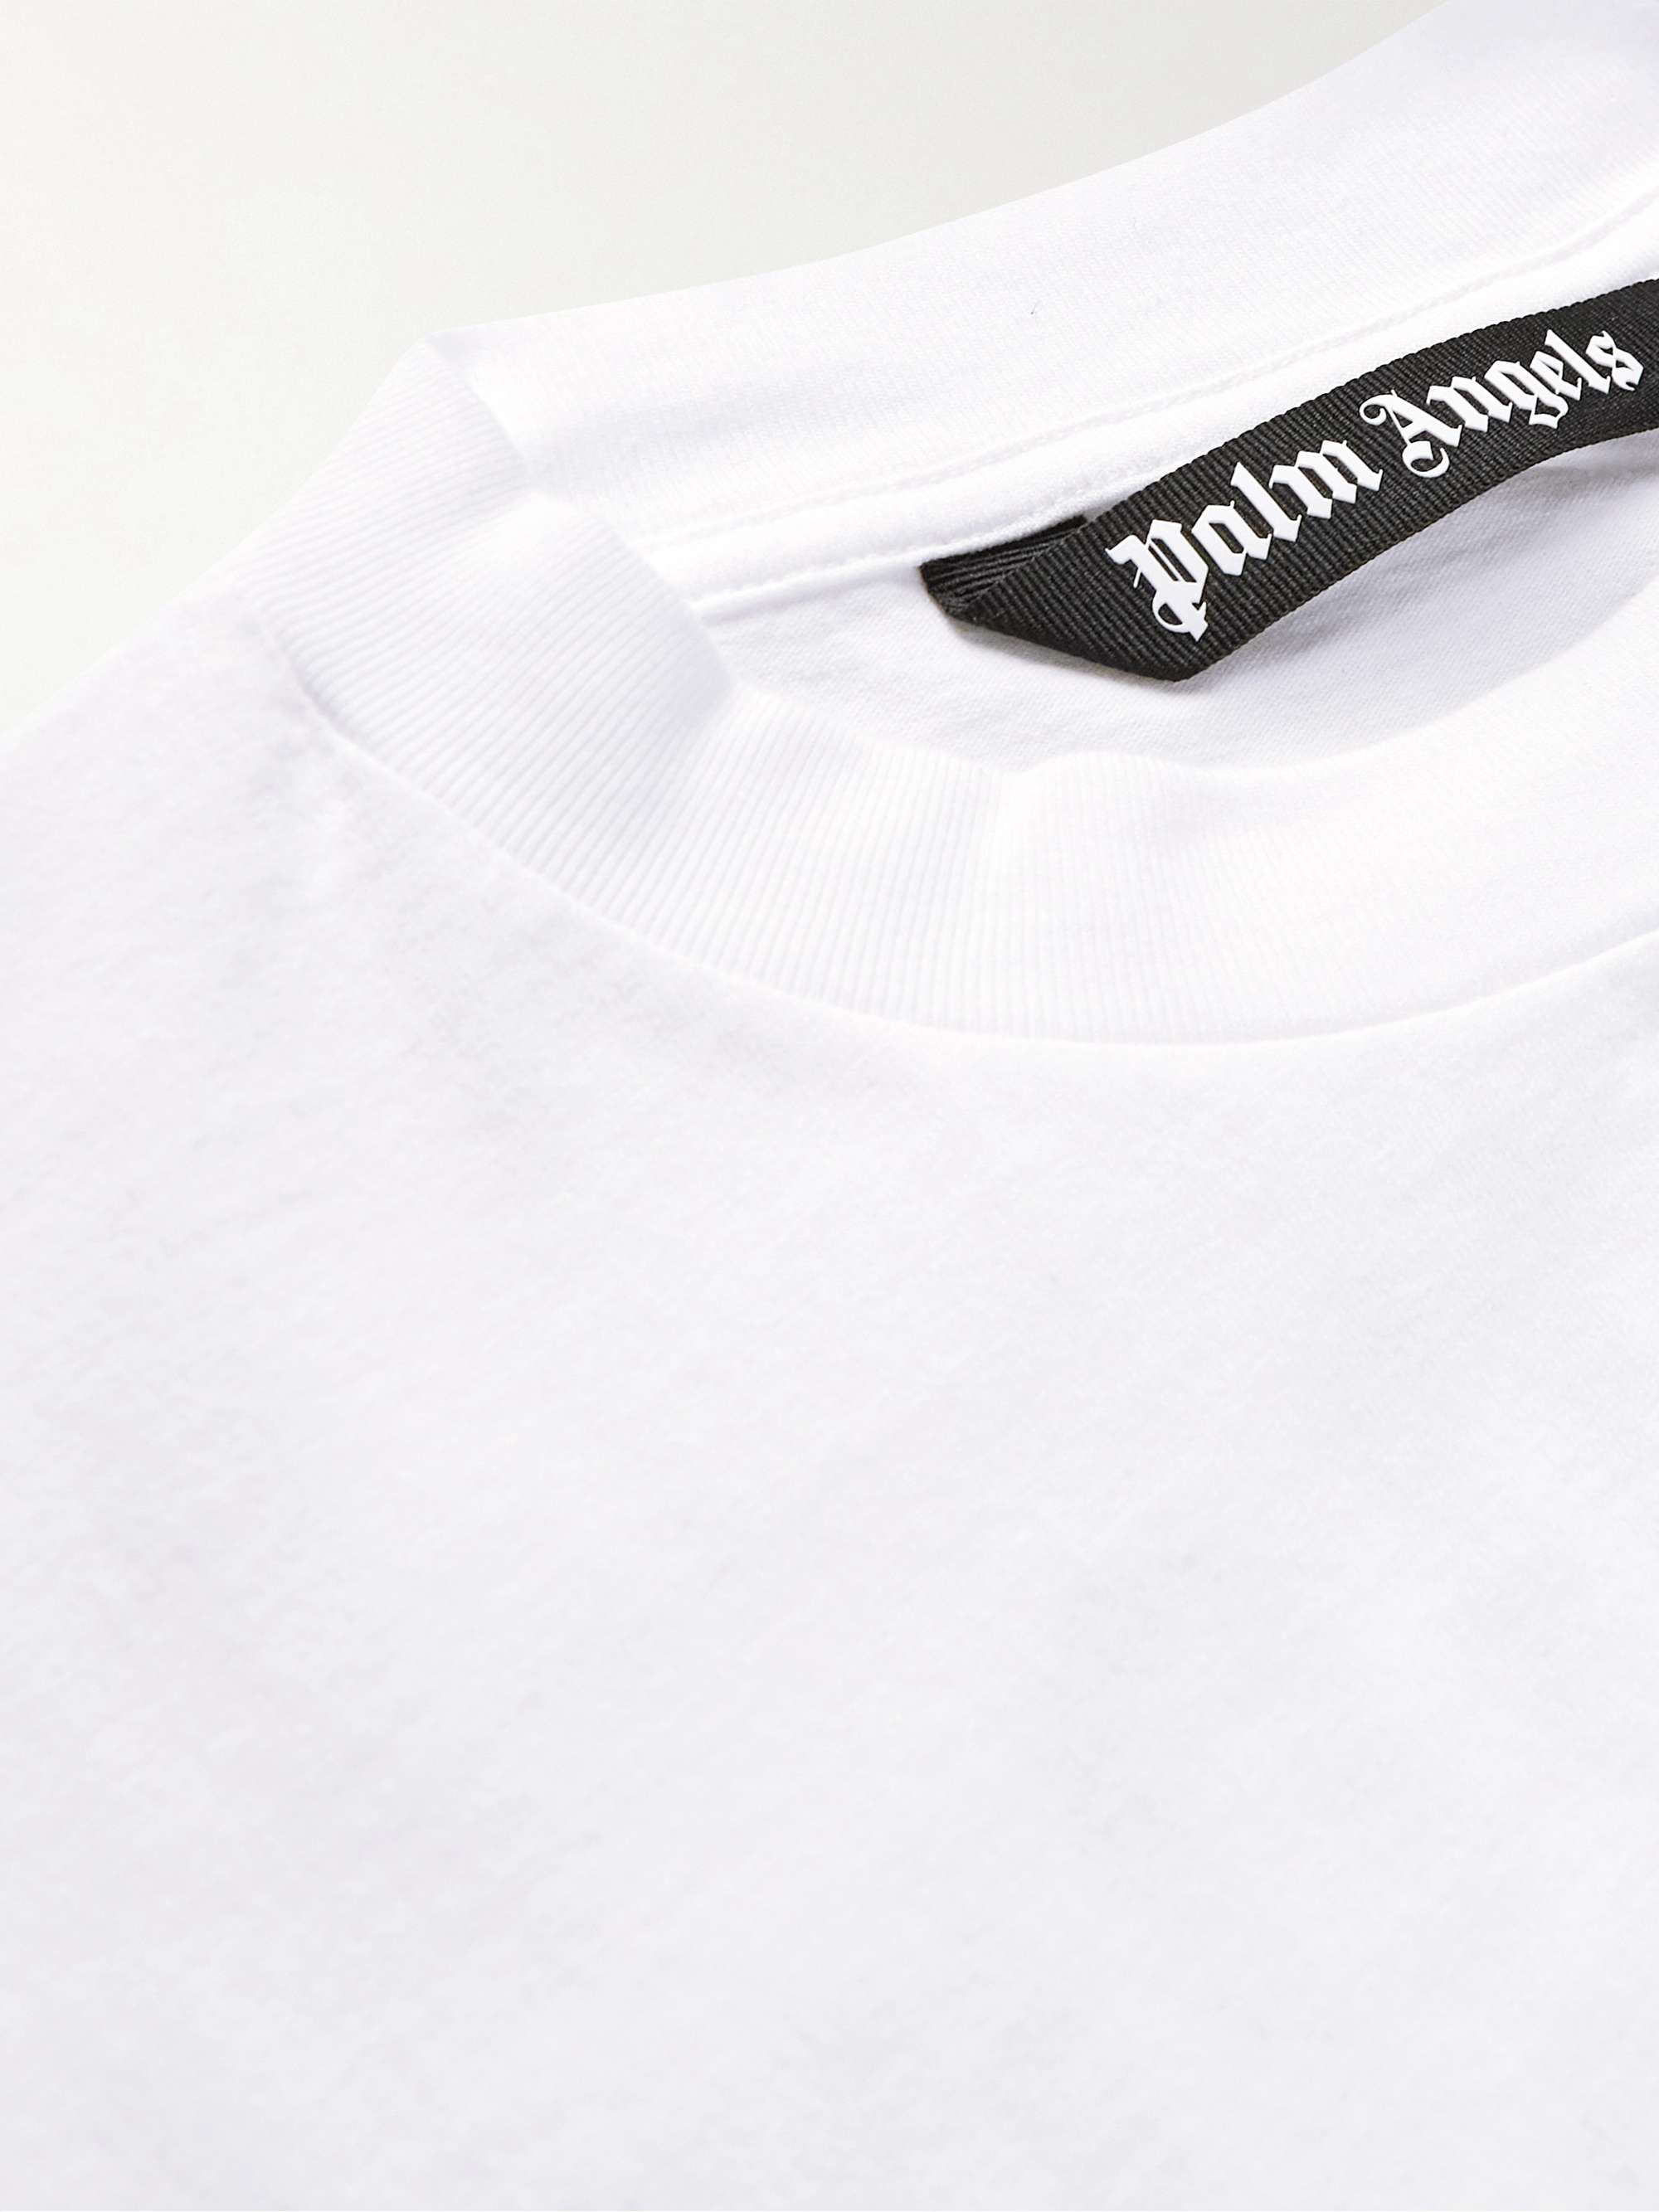 PALM ANGELS Logo-Print Cotton-Jersey T-Shirt